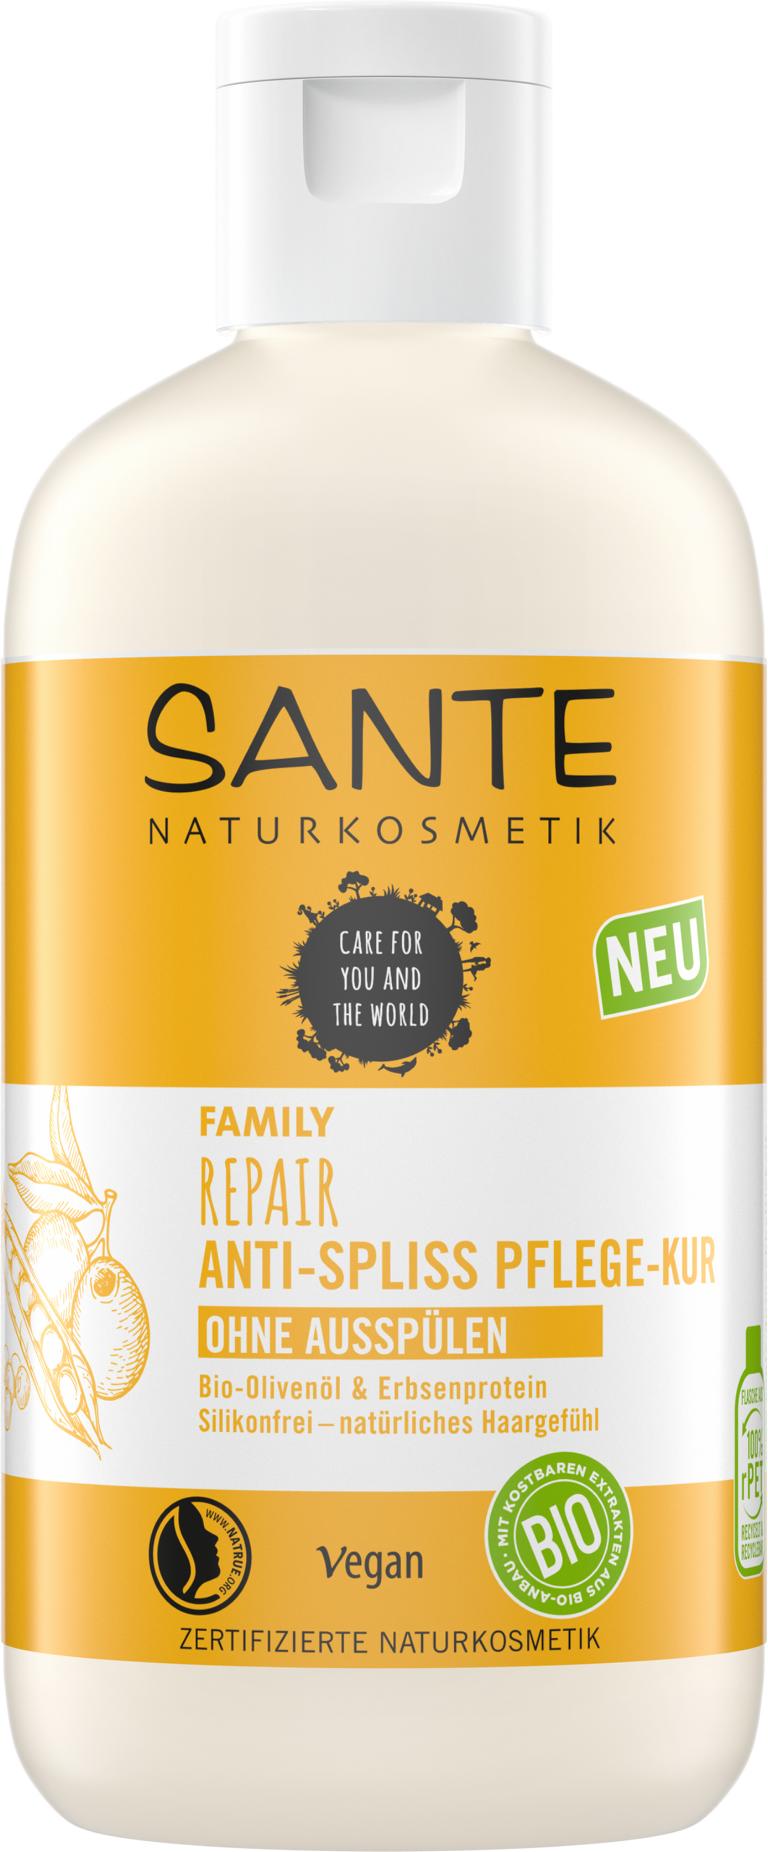 Sante FAMILY Repair Anti-Spliss Kur Bio-Olivenöl & Erbsenprotein 200 ml